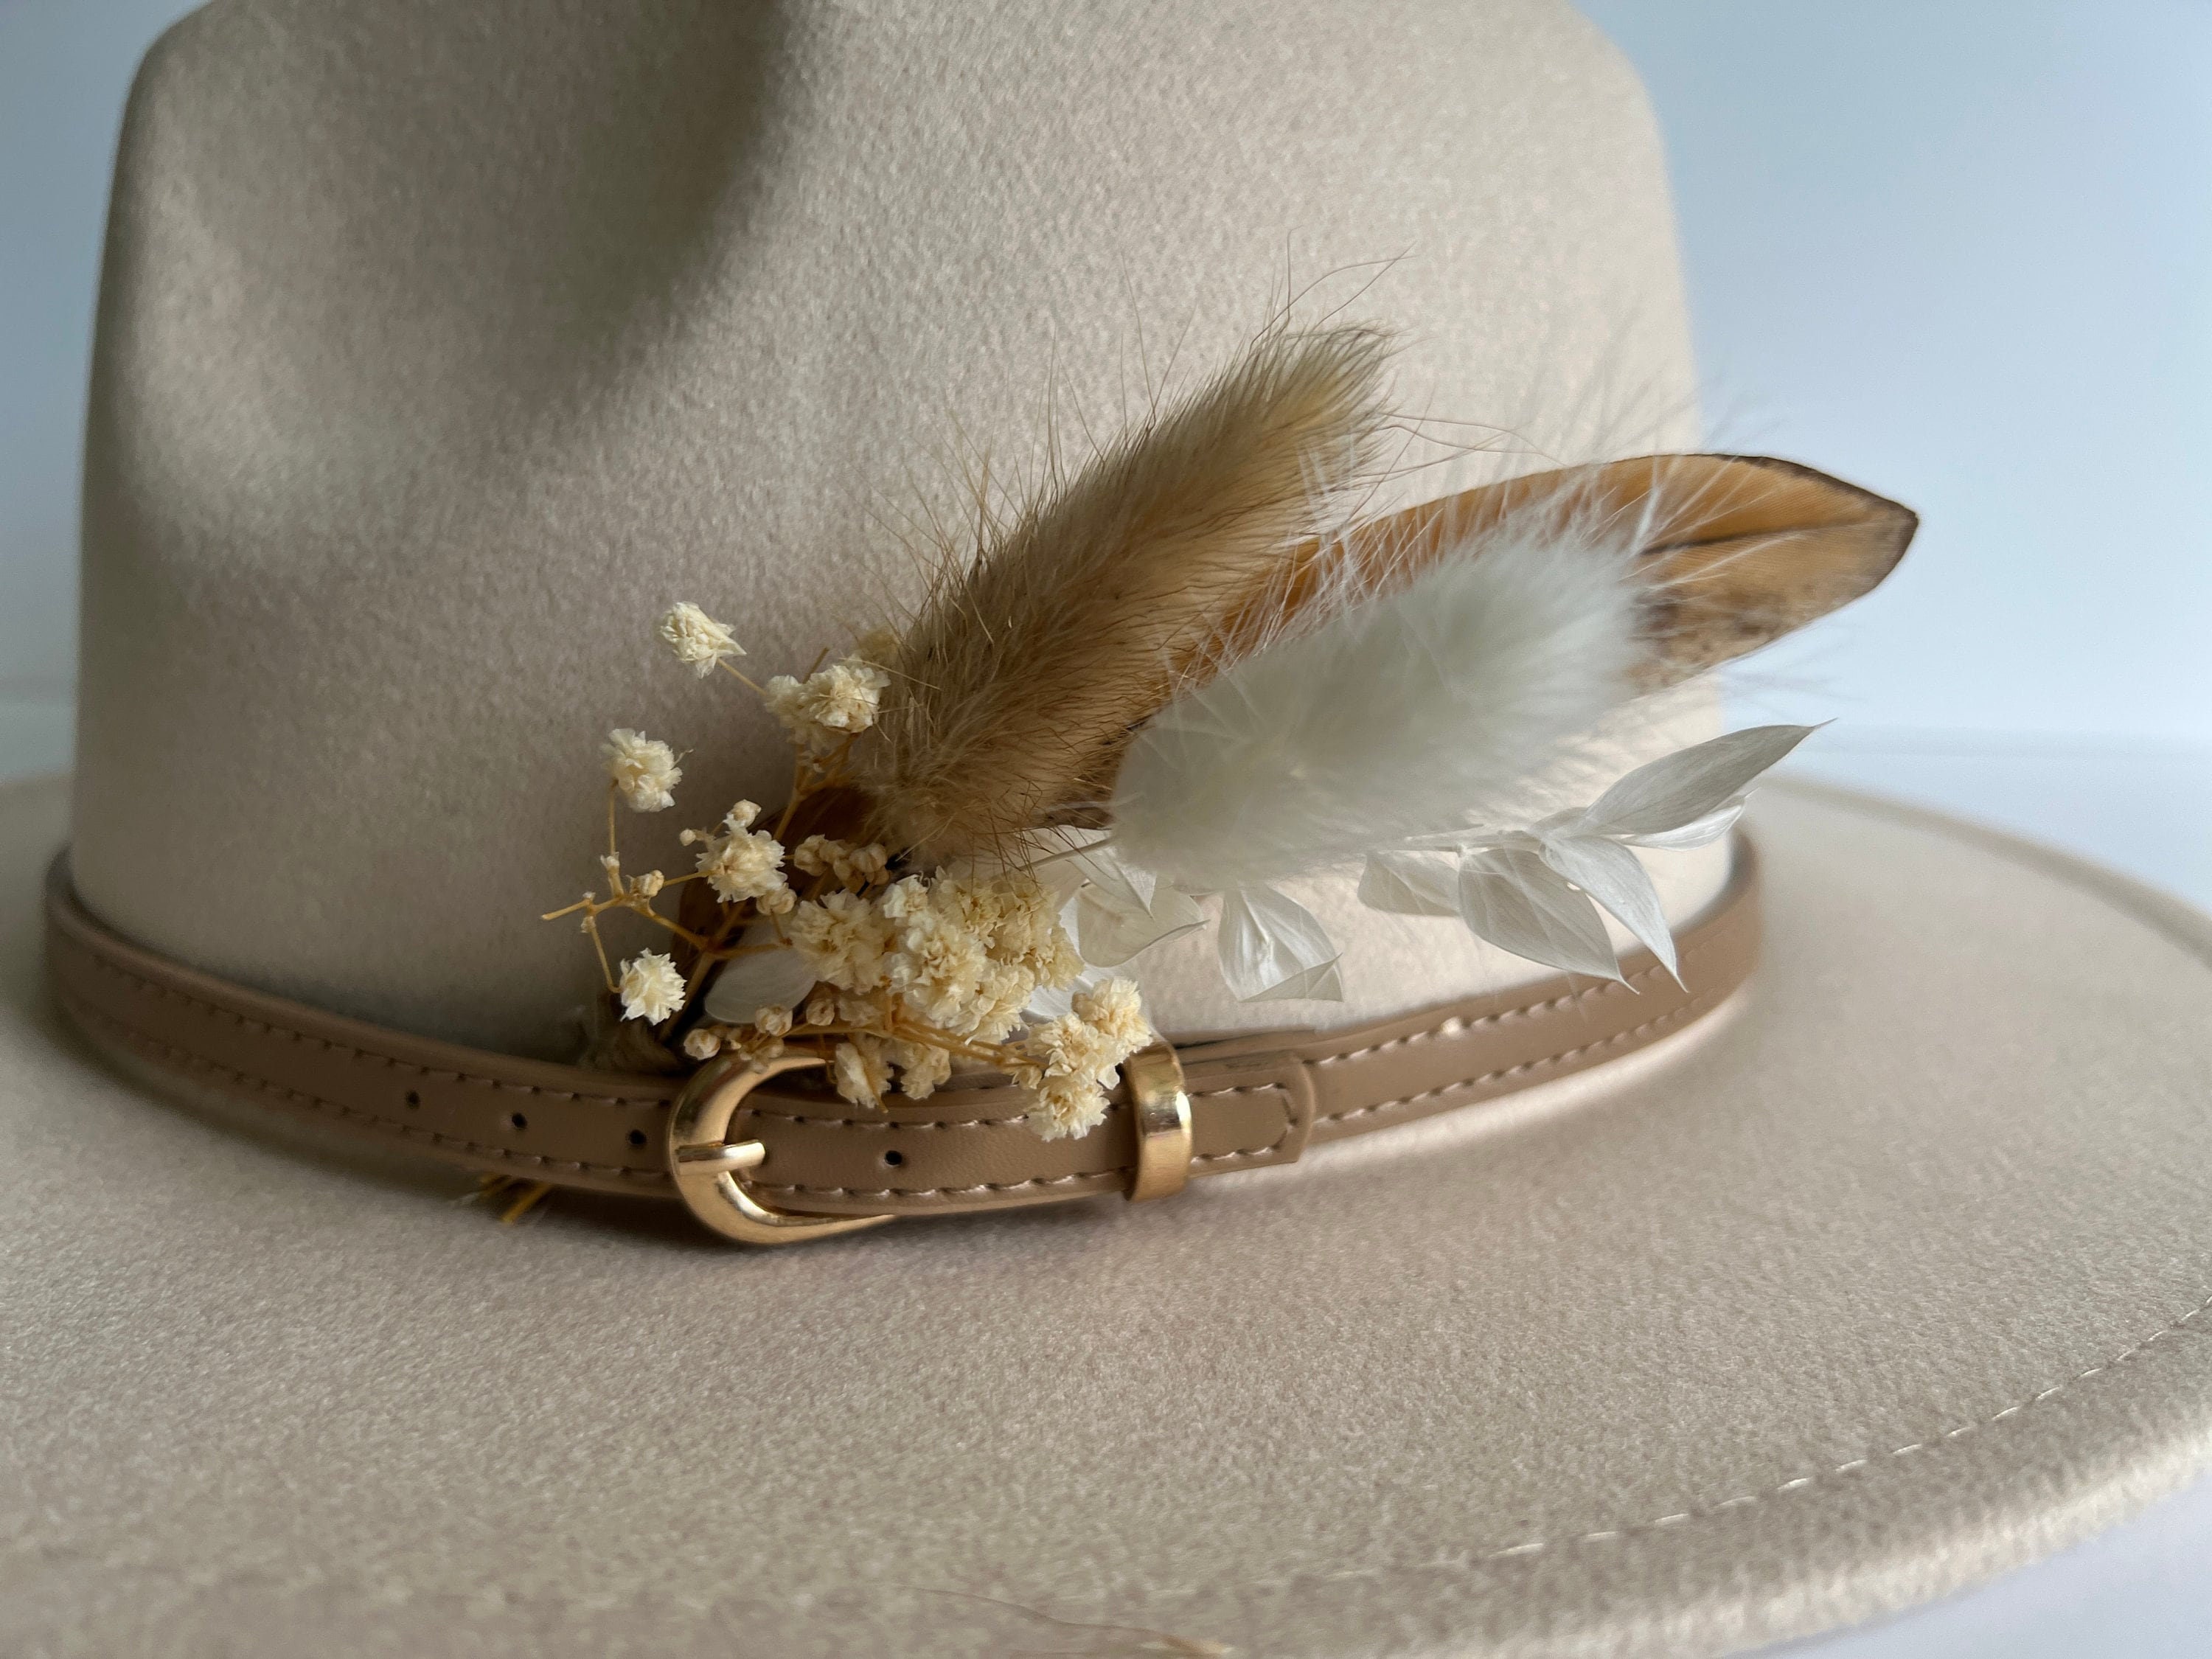 Fedora Hats - Portfolio - My Fancy Feathers